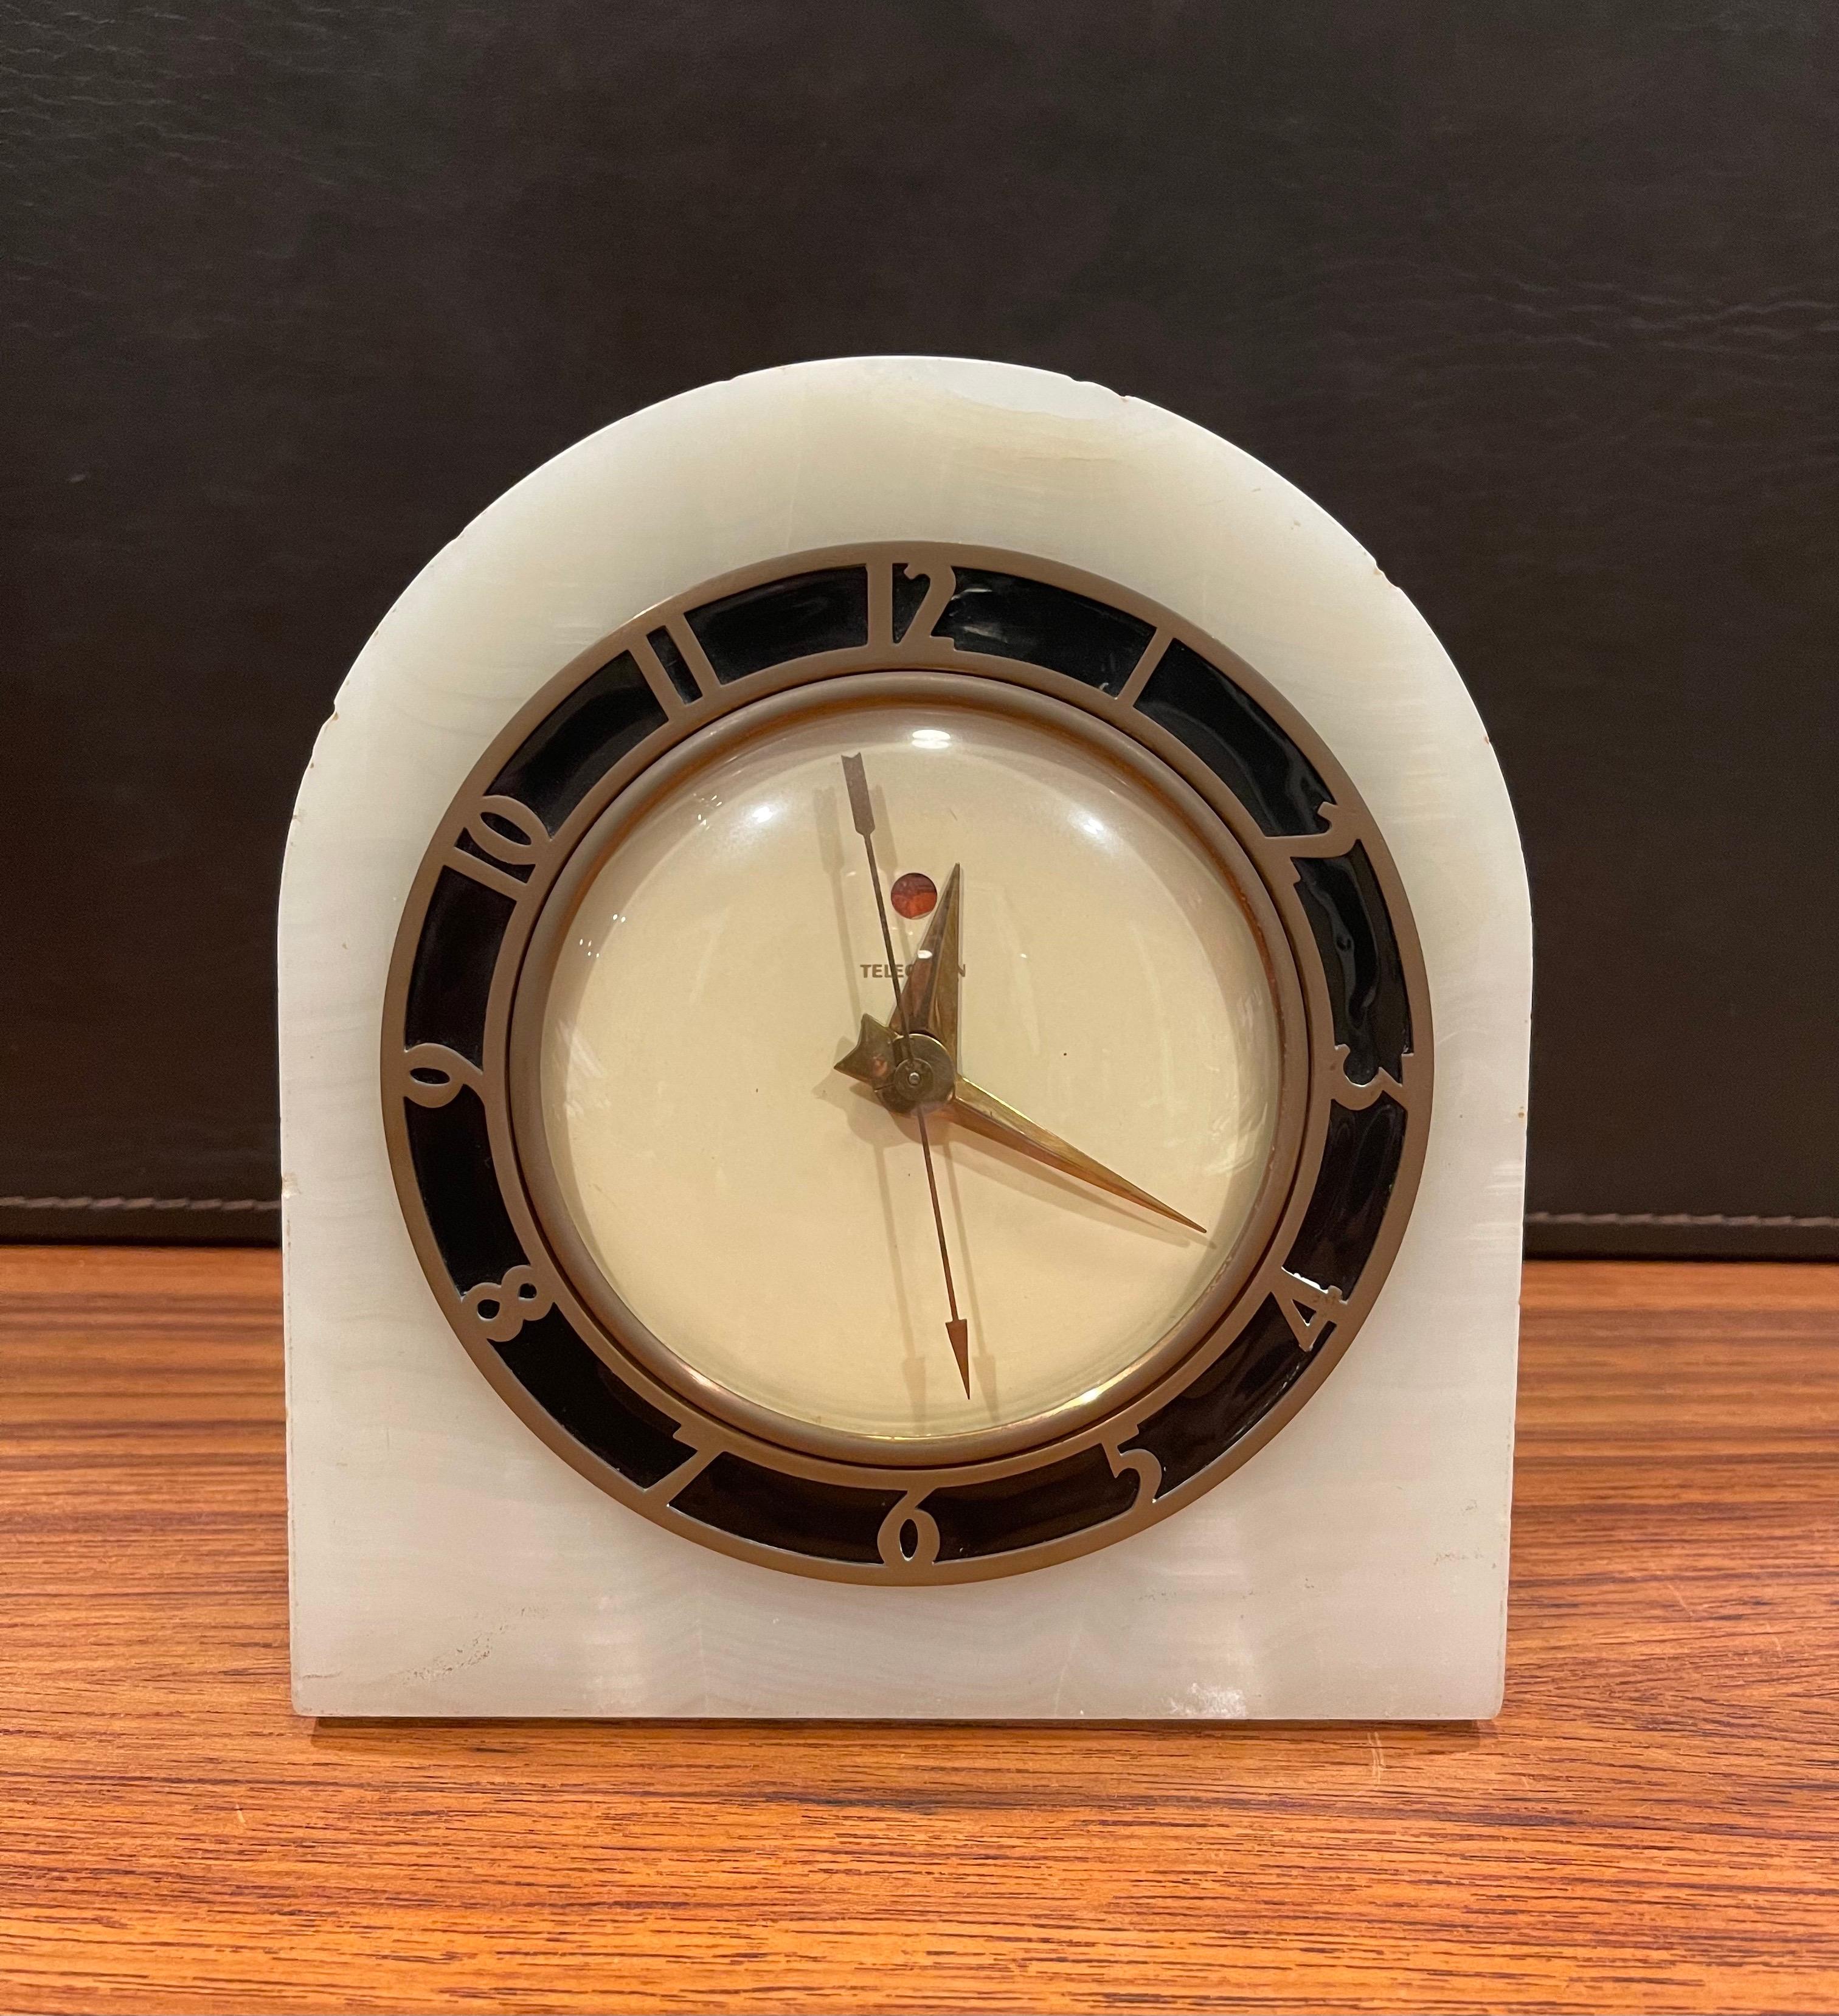 American Electric Art Deco White Onyx Mantle Clock by Telechron